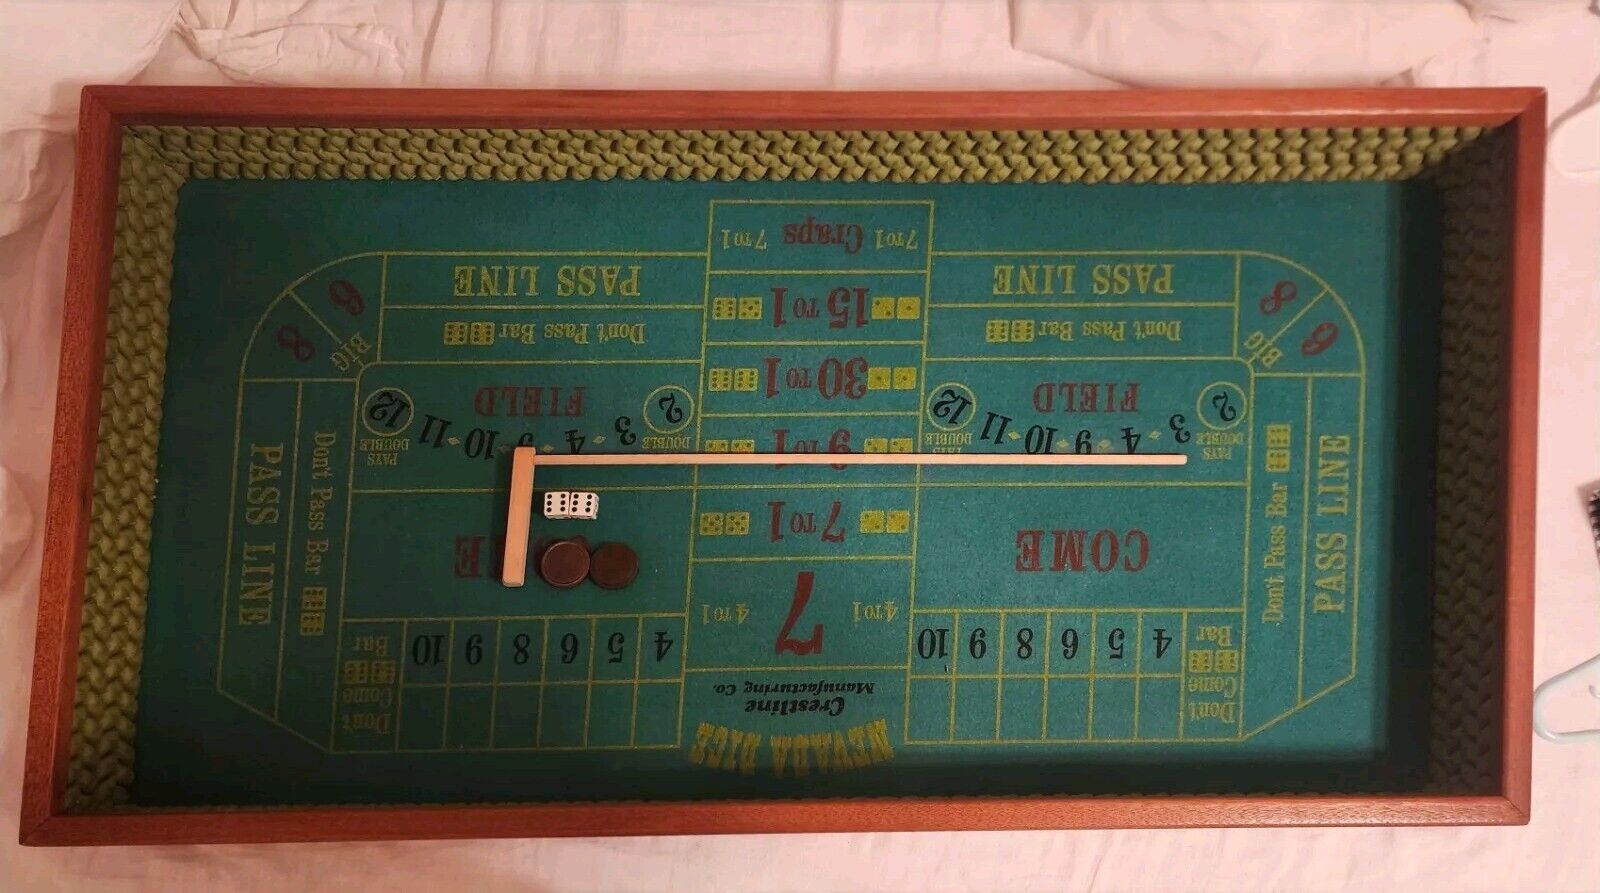 Nevada Dice Craps Table Game Crestline Mfg Solid Wood Table Top w/Box Vintage 